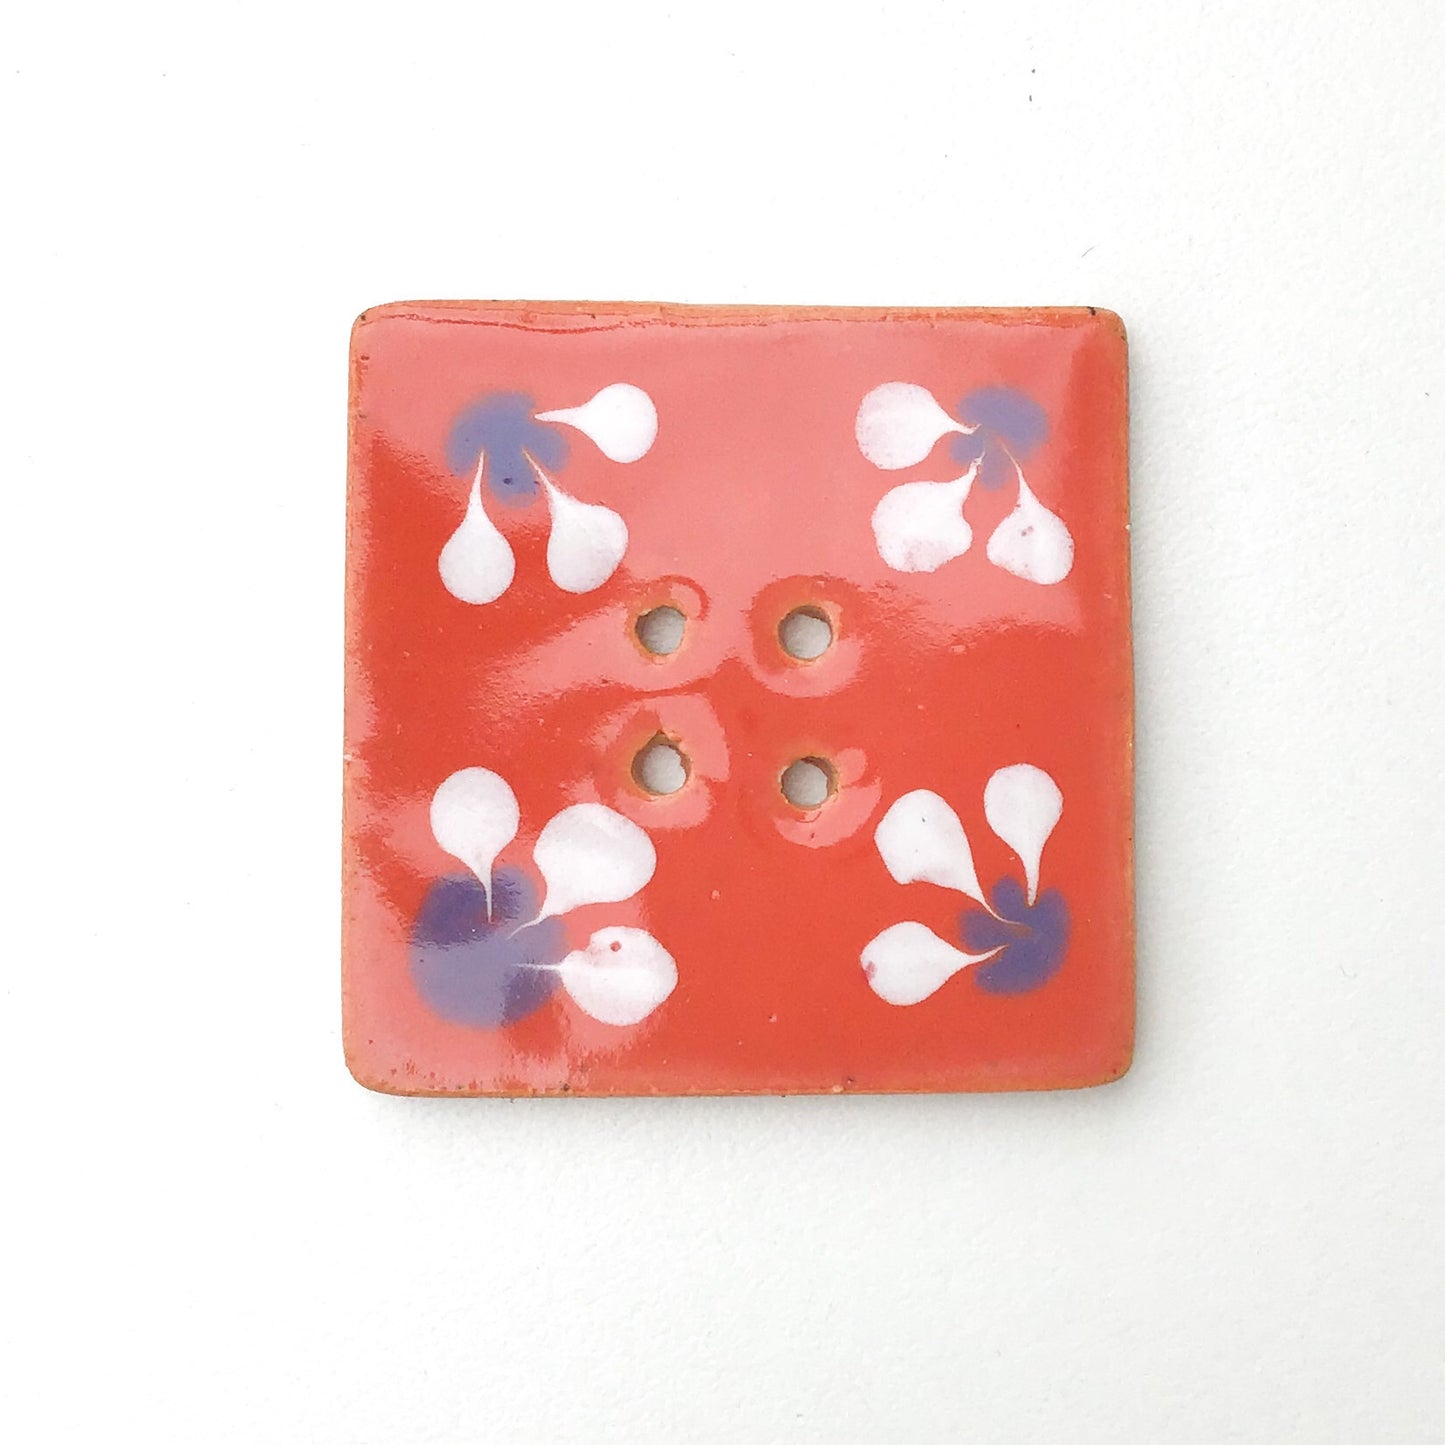 Large Square Decorative Button - Pinkish-Orange - Periwinkle - White - Art Button - 1 7/16"